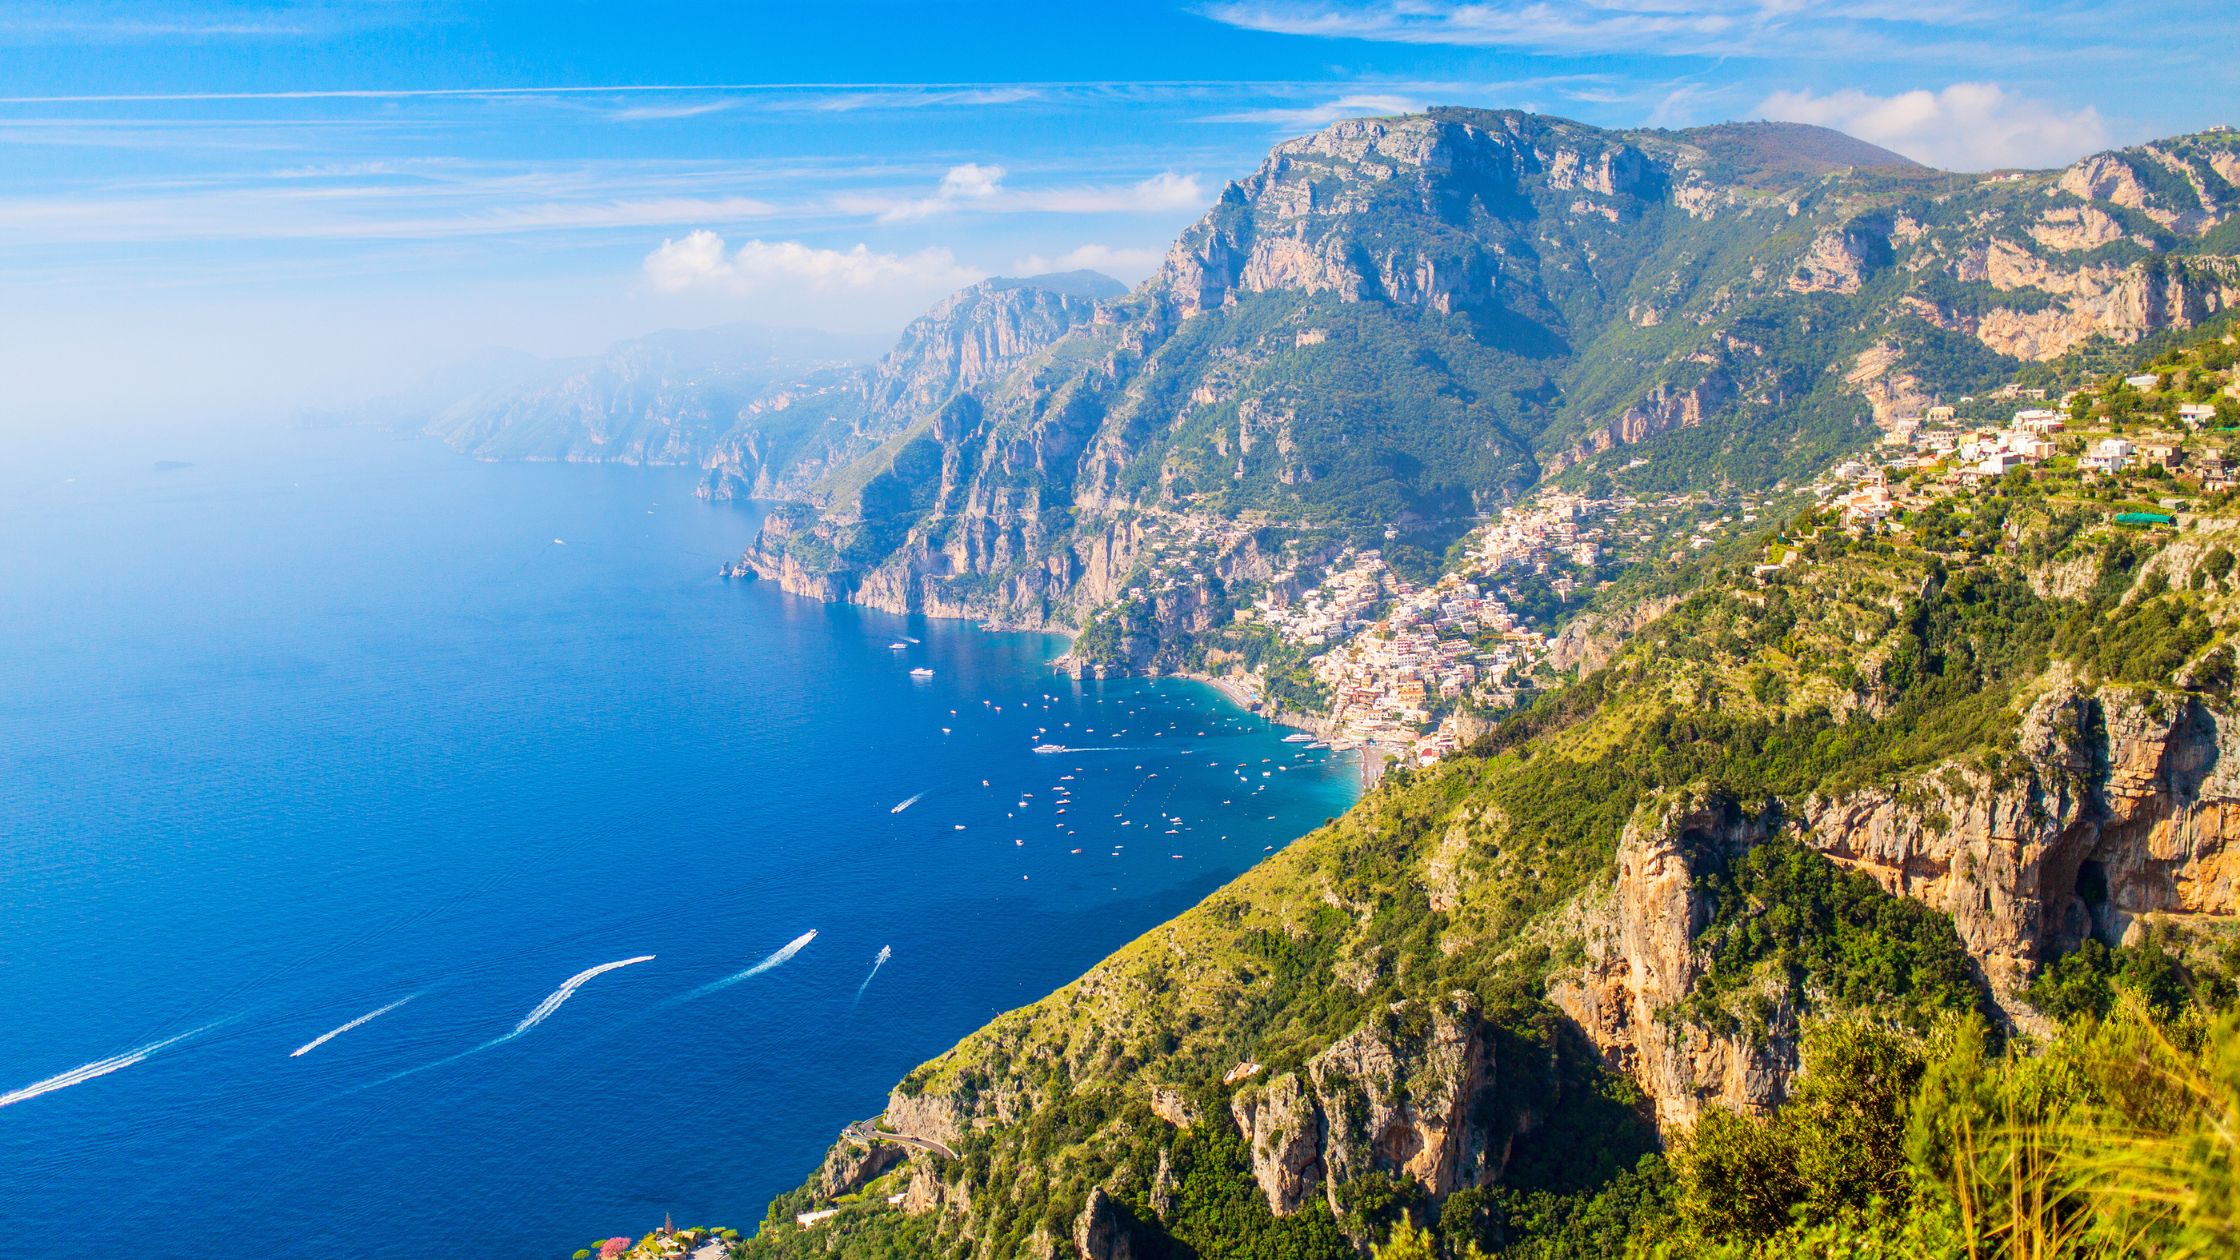 The Path of Gods - Amalfi Coast